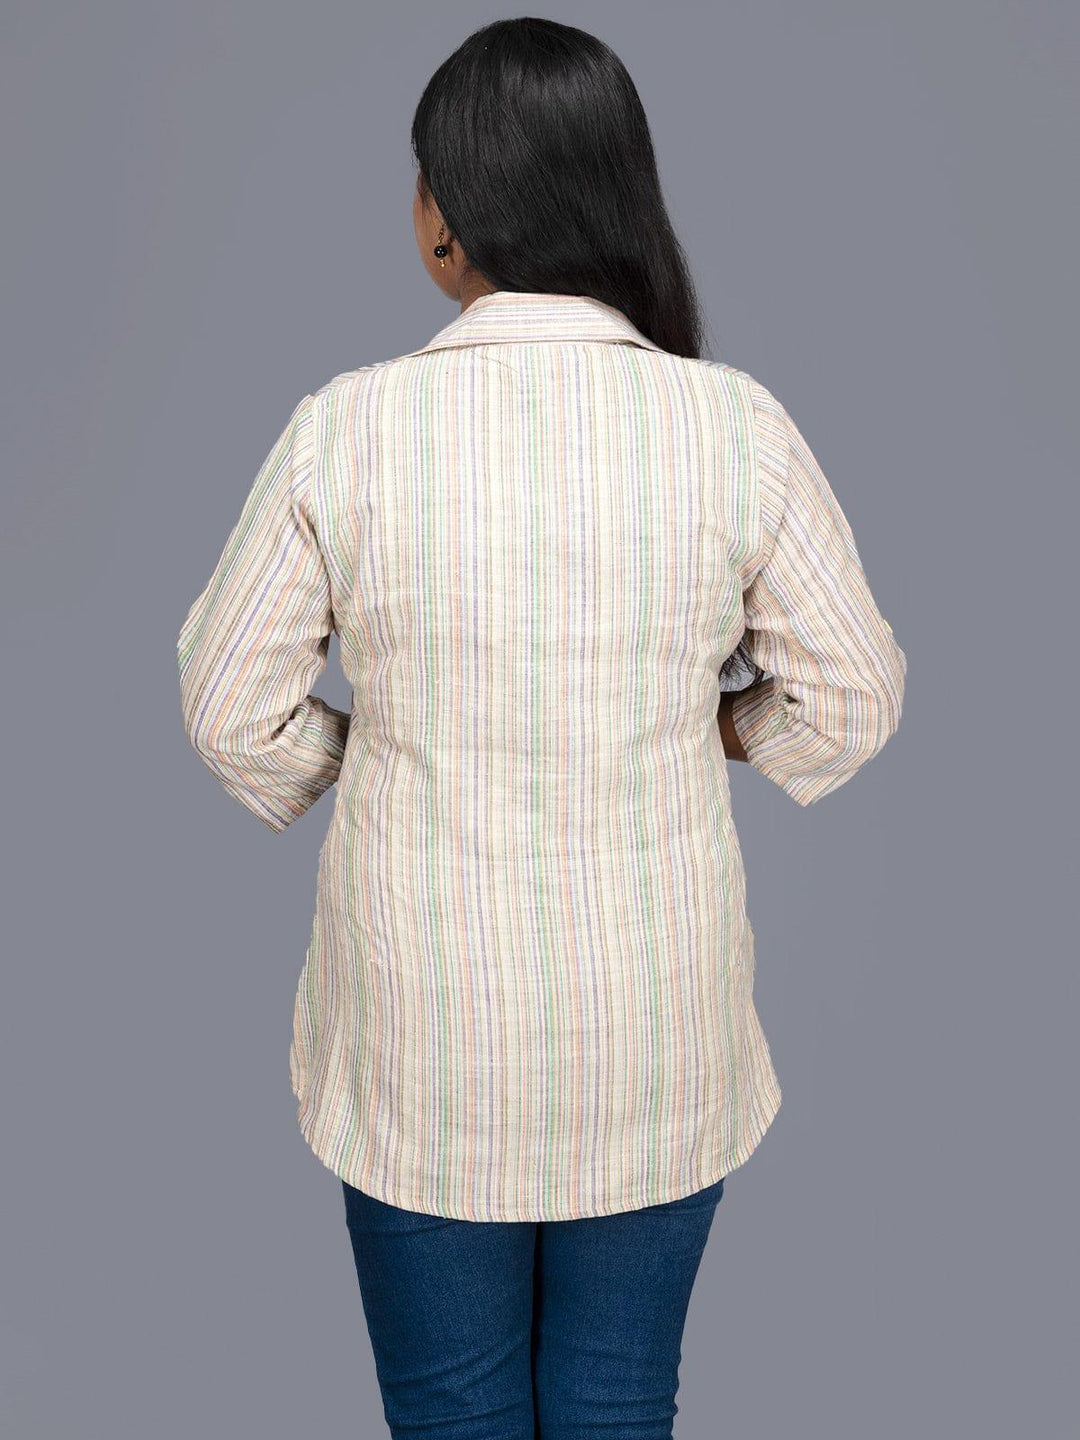 Handwoven Multi Color Striped Cotton Women Shirt - WeaversIndia